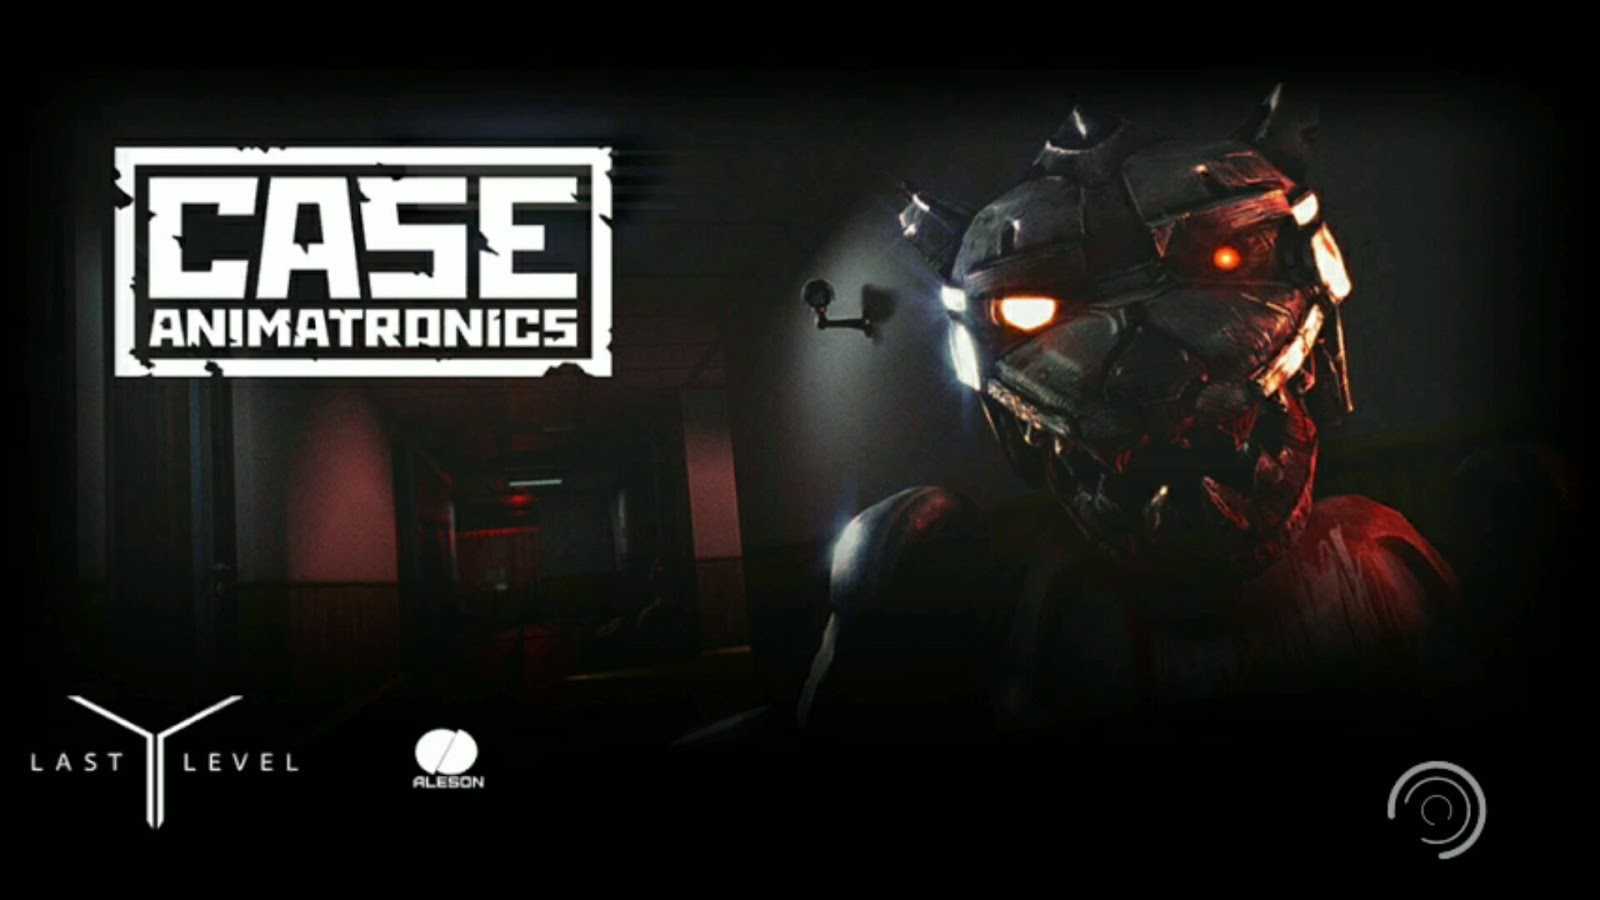 game horor android Case: Animatronics